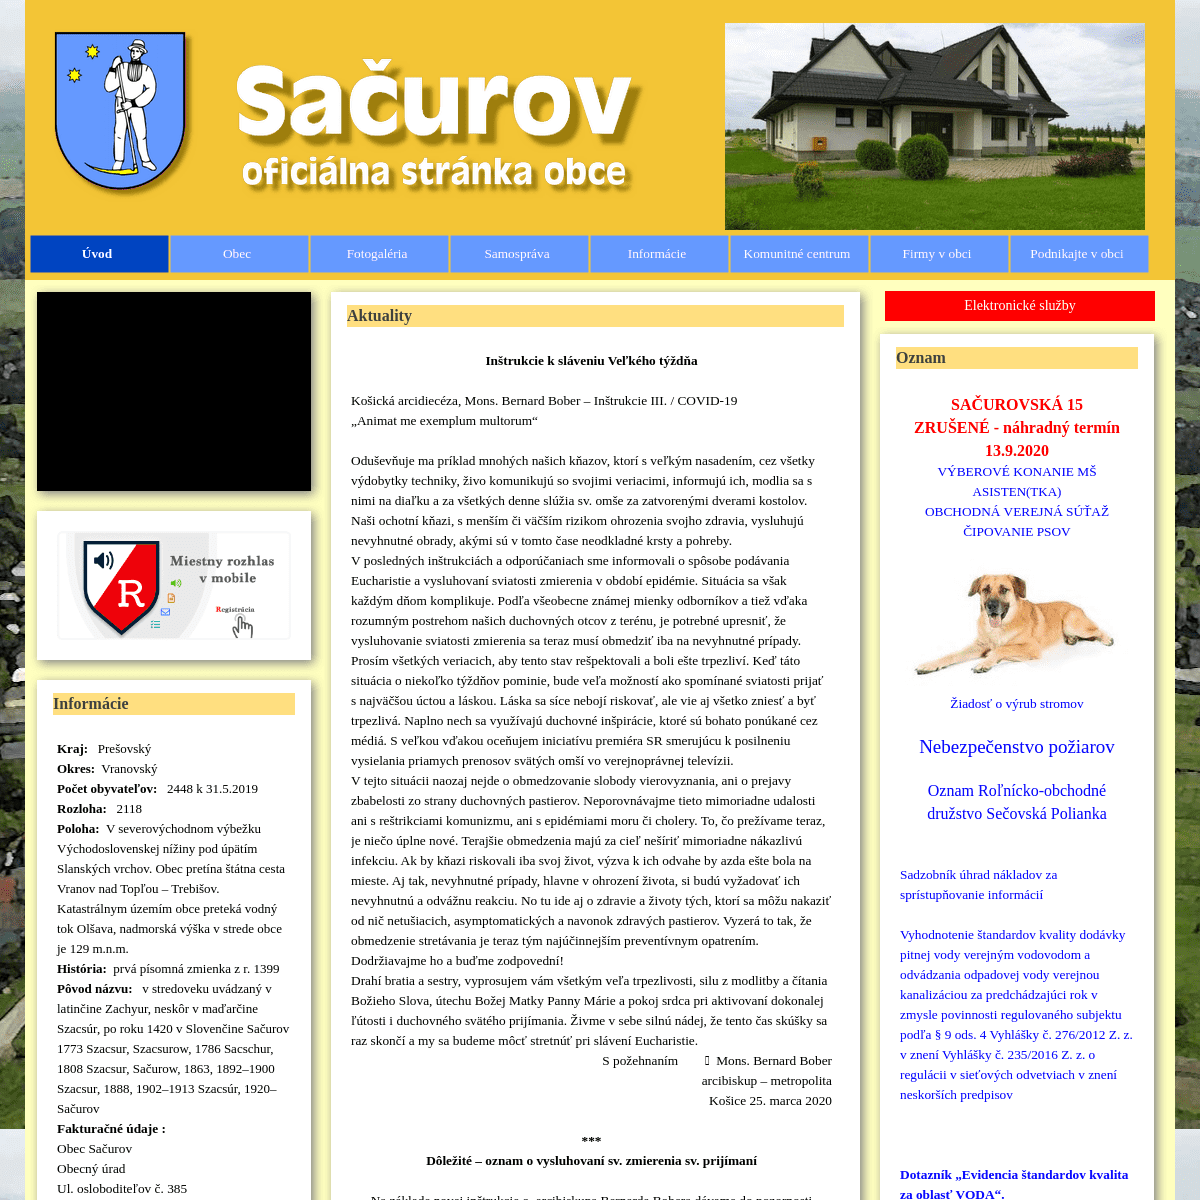 A complete backup of sacurov.sk